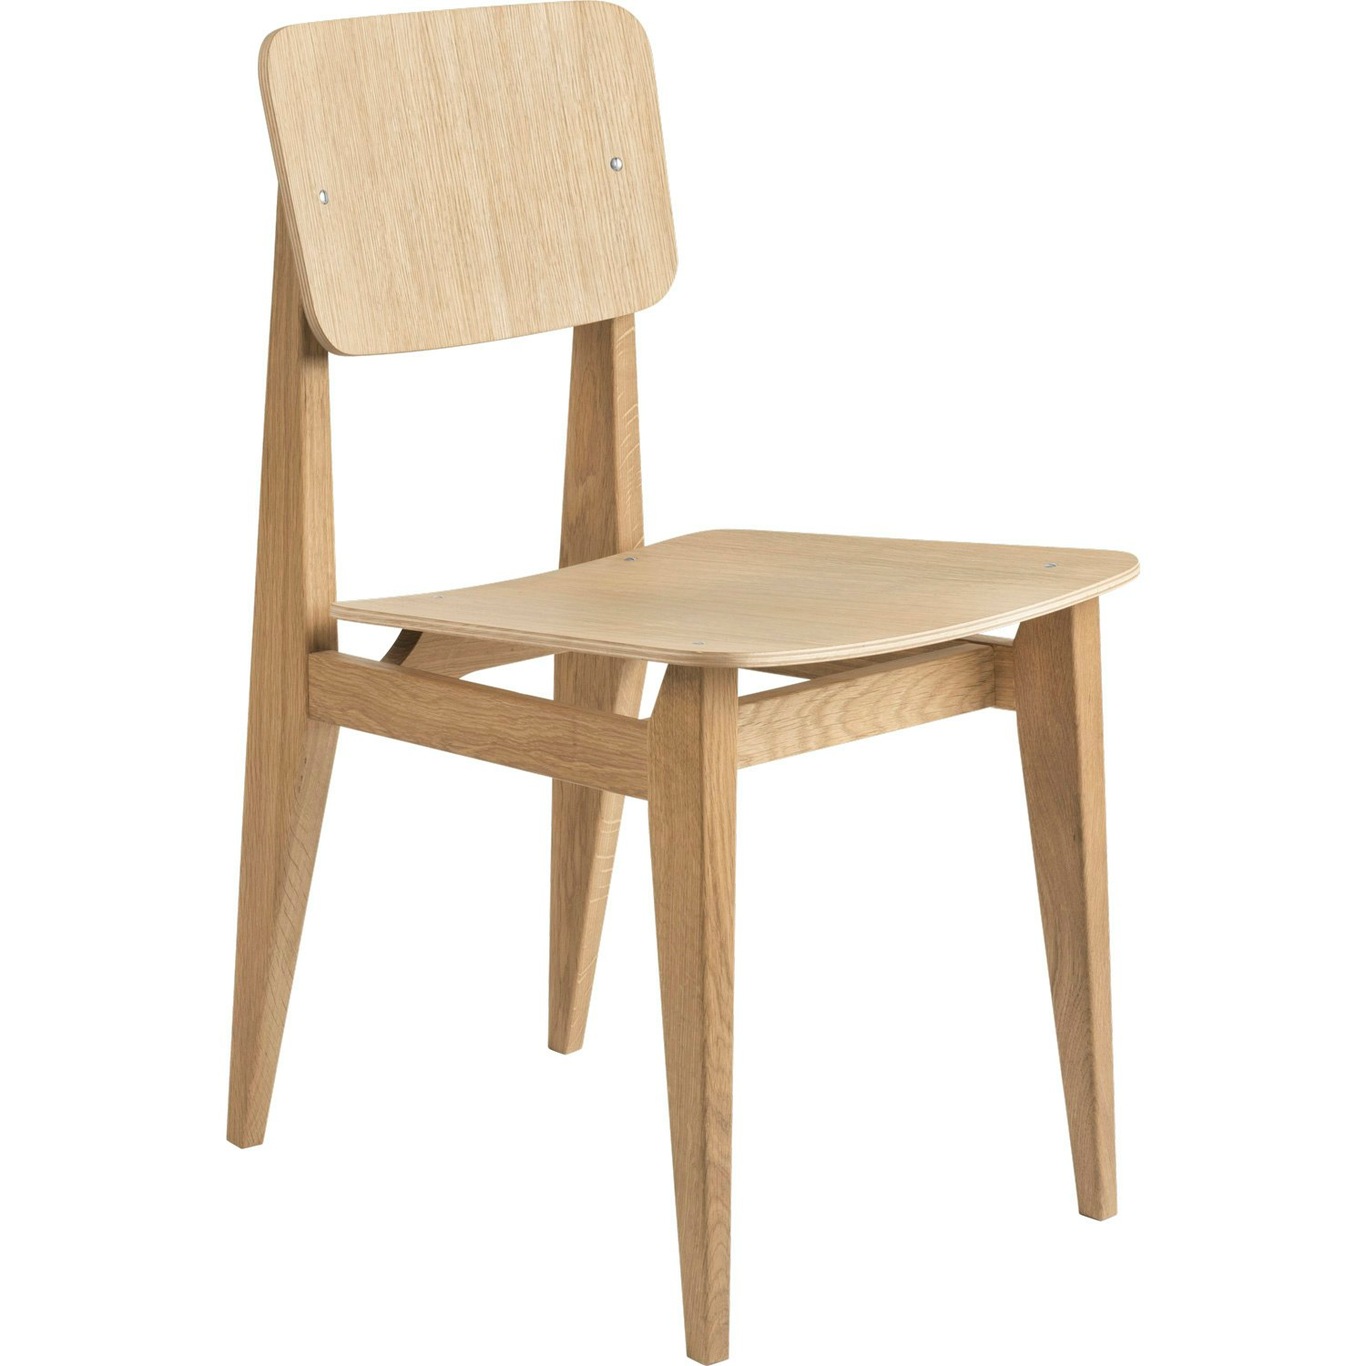 C-Chair Stol, Fanér / Oljad Ek